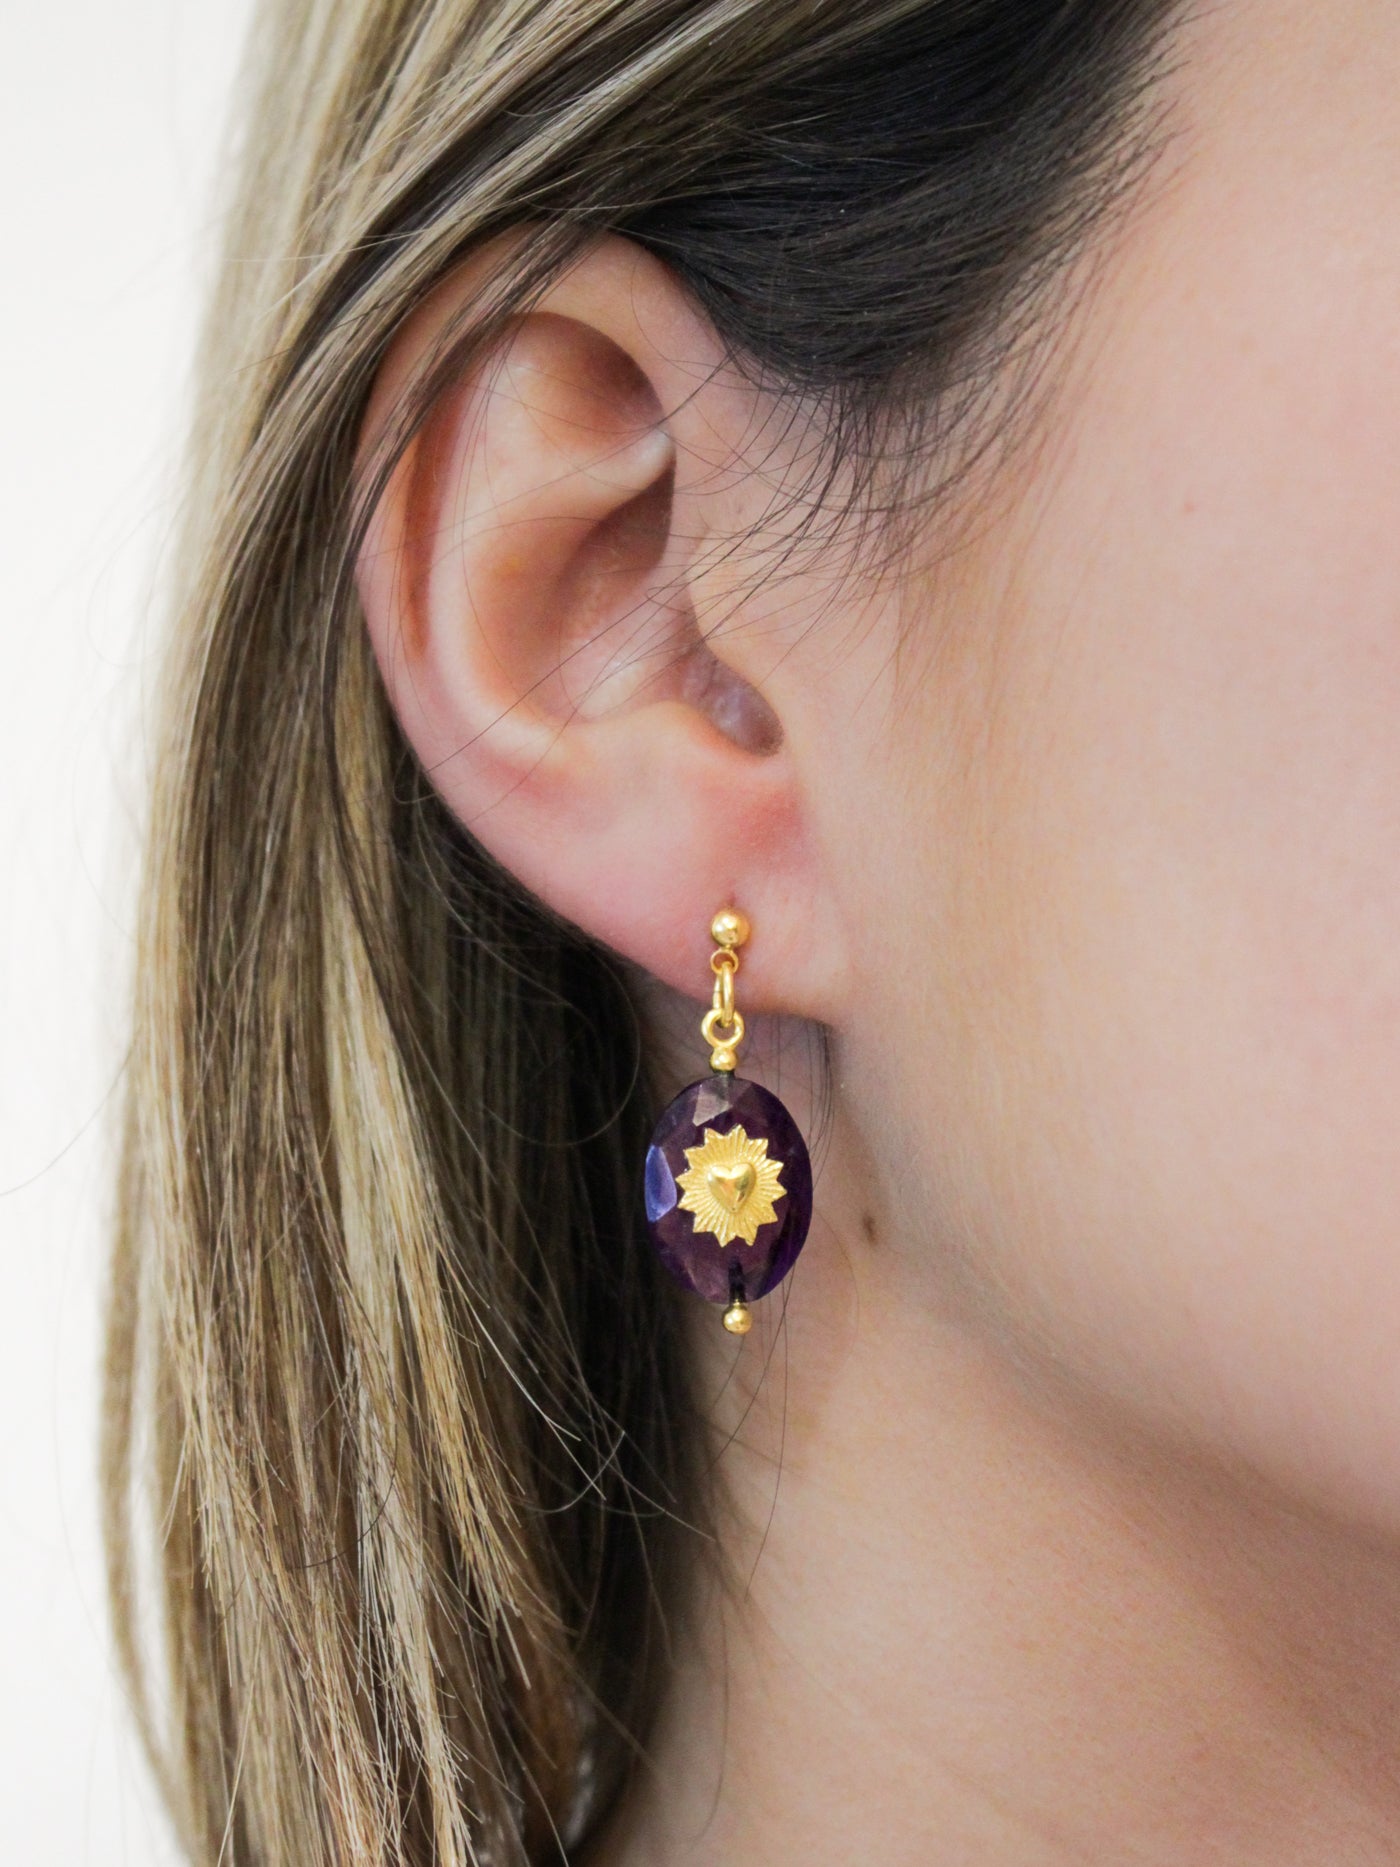 Ex voto stone earrings - MARGAUX